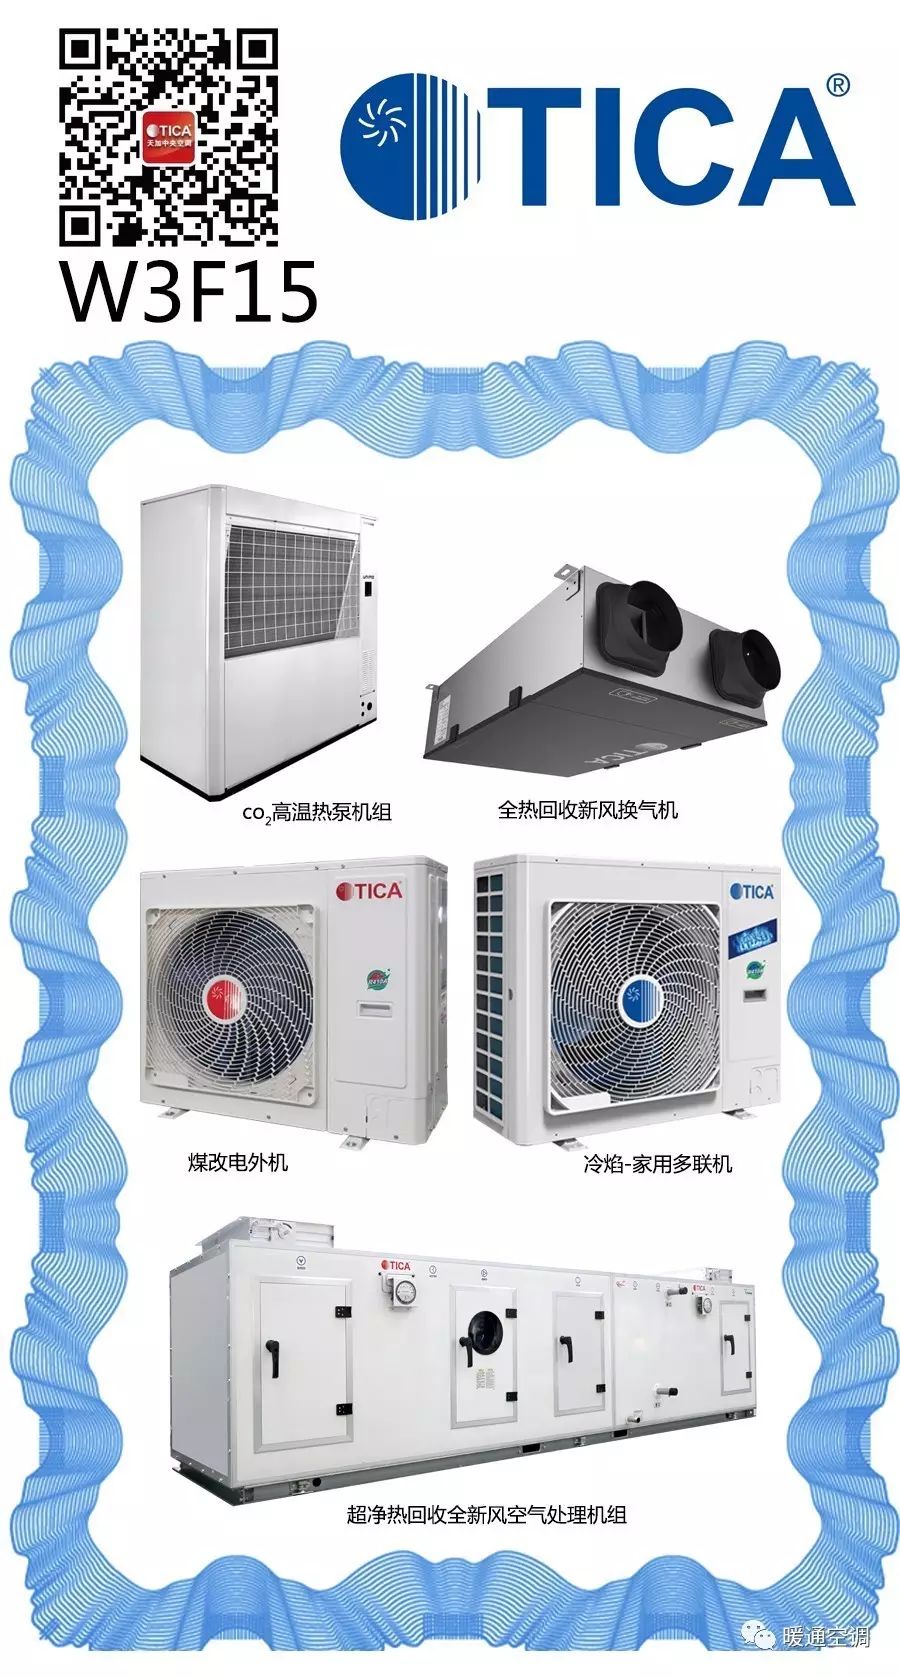 w3f15 南京天加空调设备有限公司